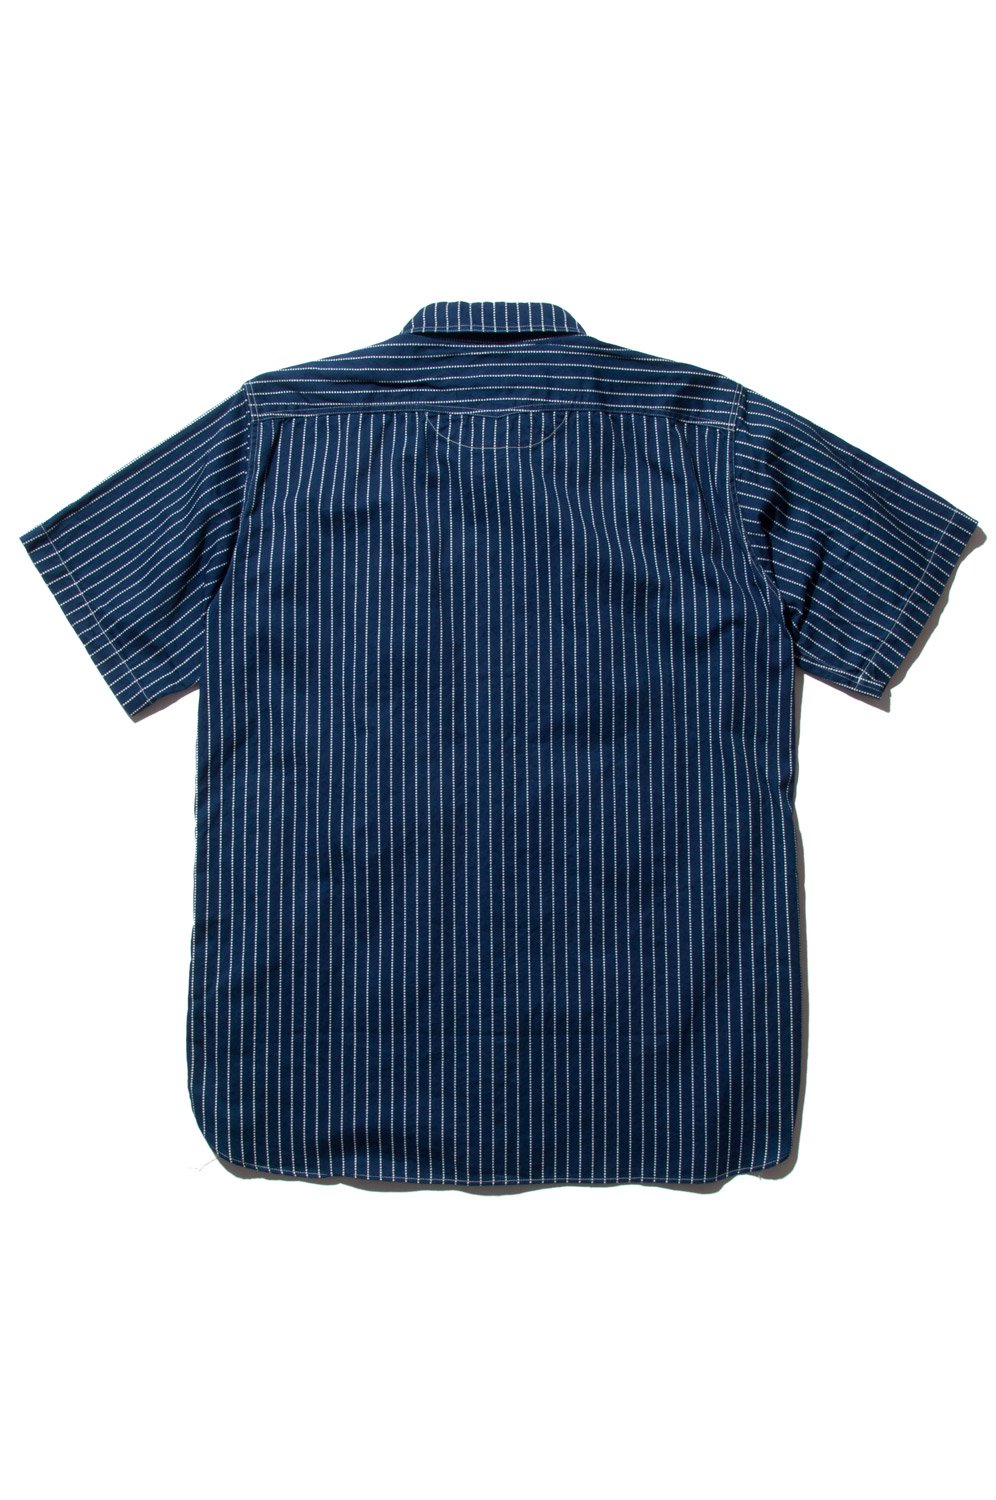 SUGAR CANE(シュガーケーン) ウォバッシュストライプワークシャツ 8.5 